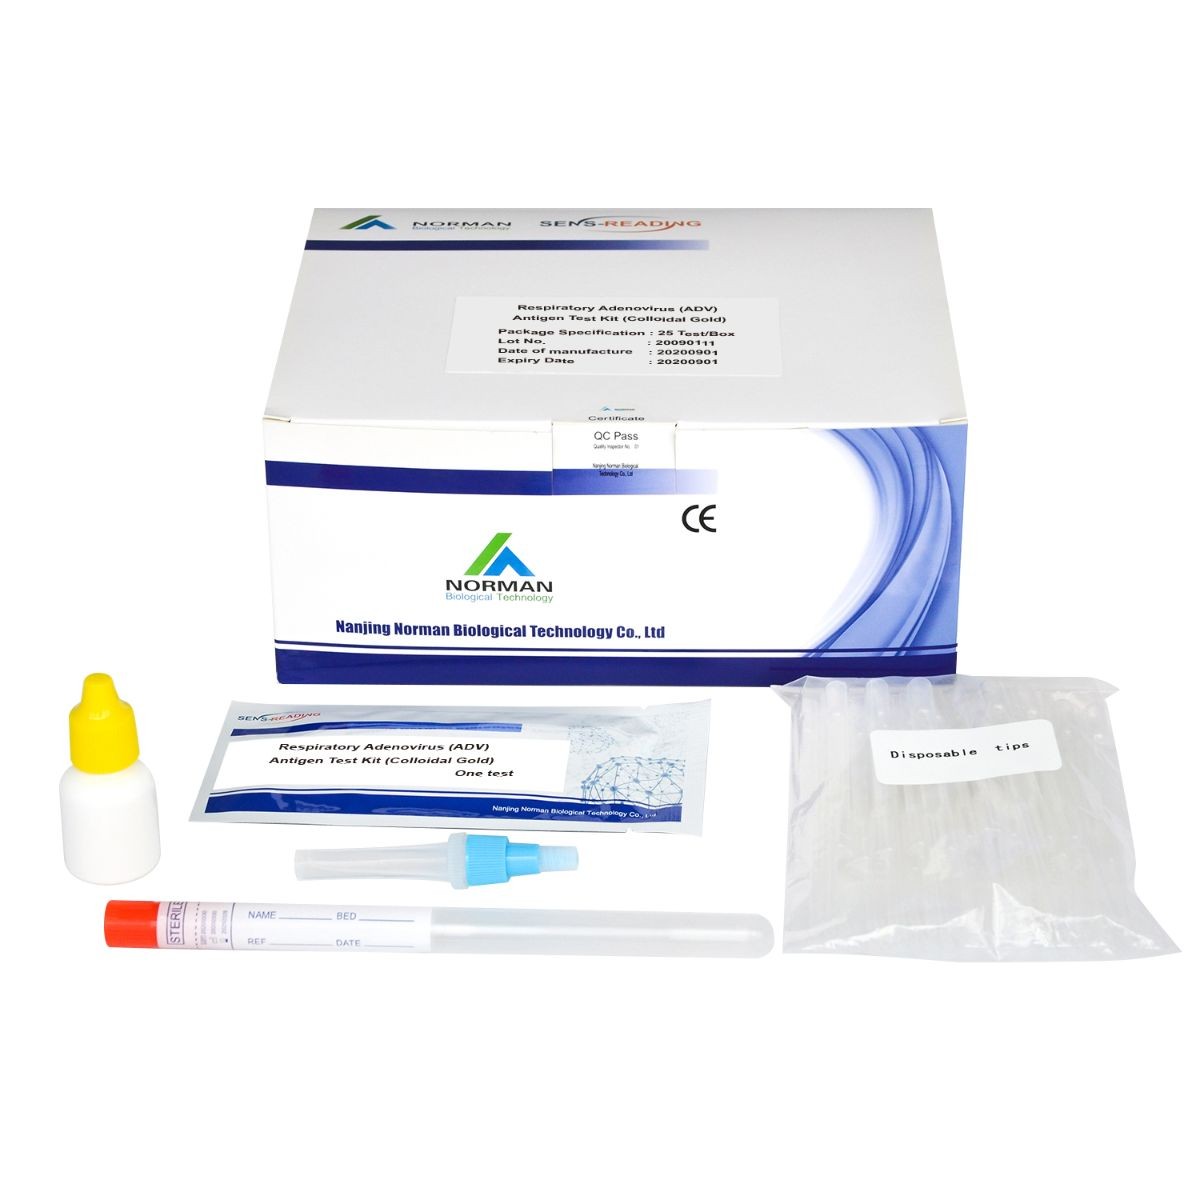 ADV Antigen Test Kit